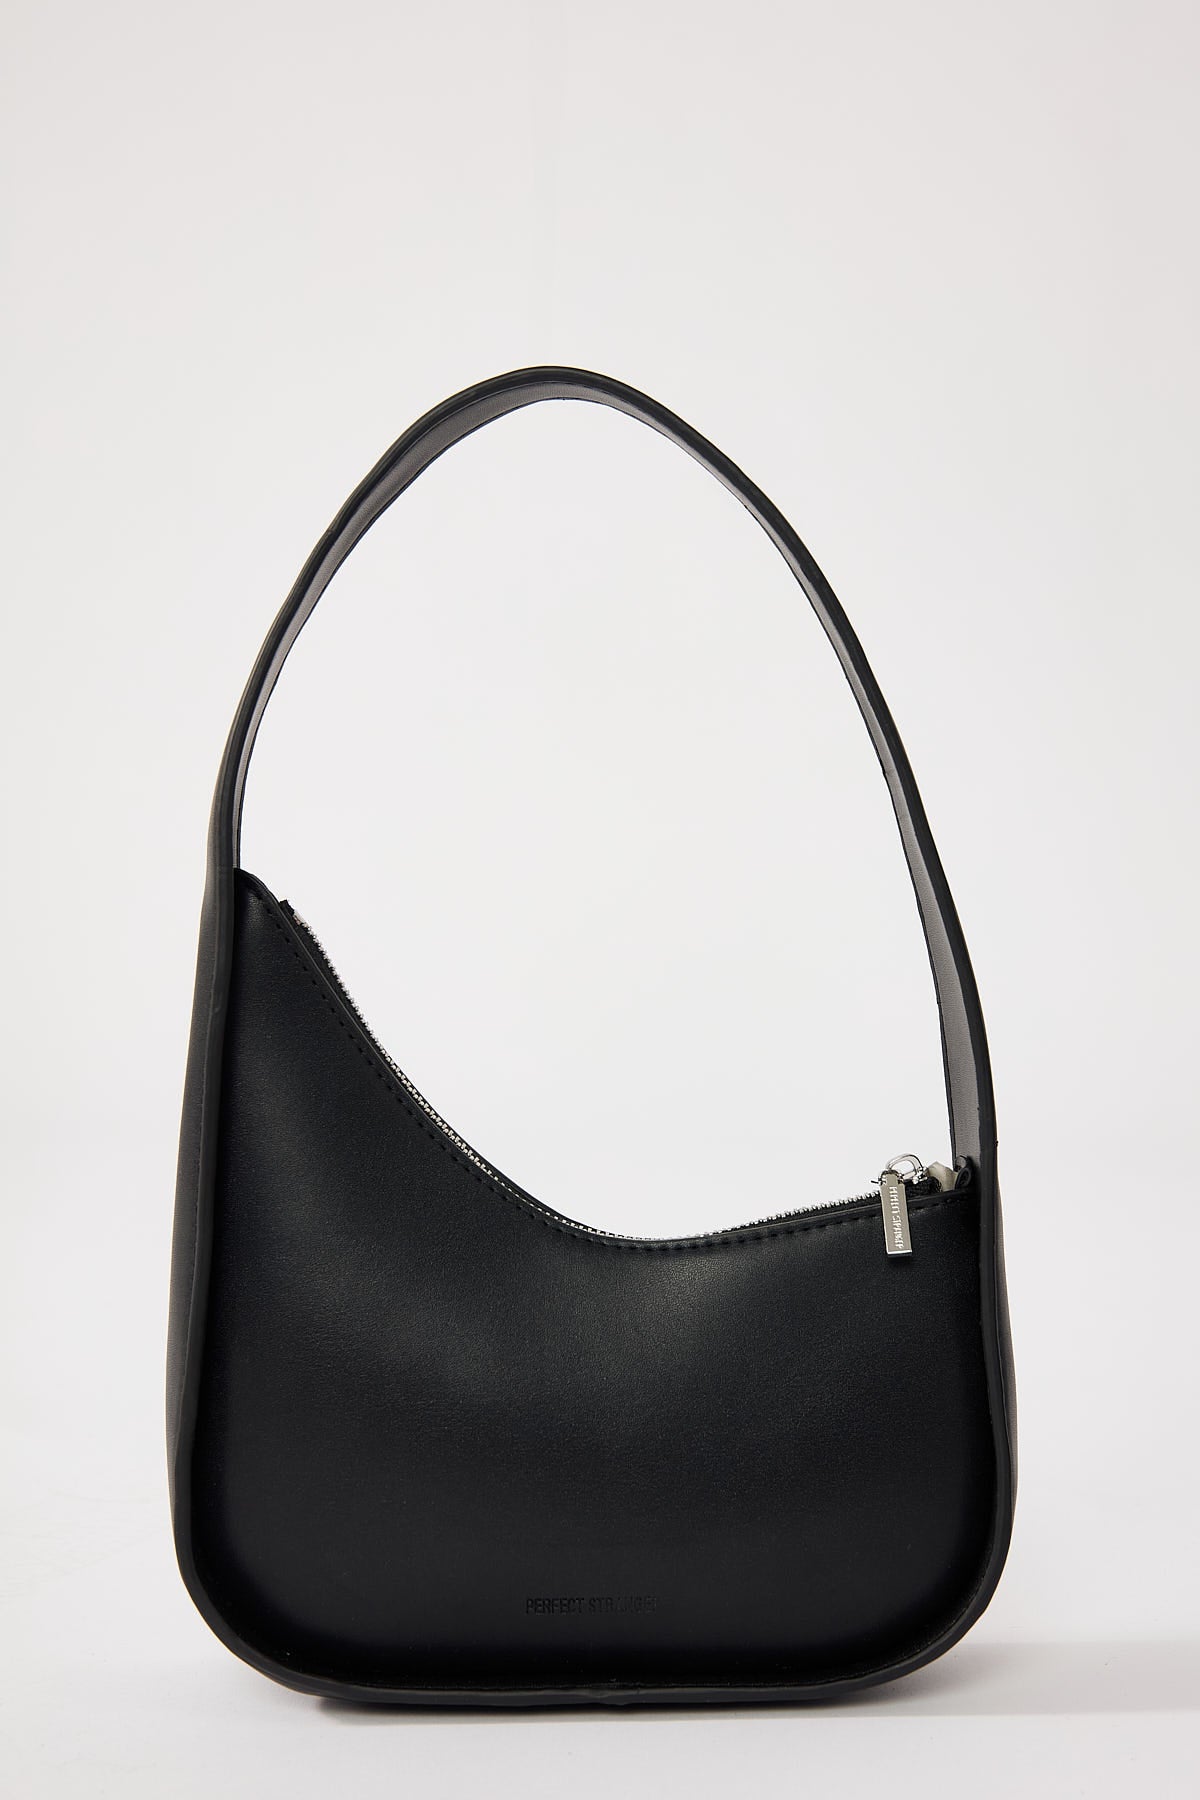 Perfect Stranger Amara Asymmetrical Handbag Black